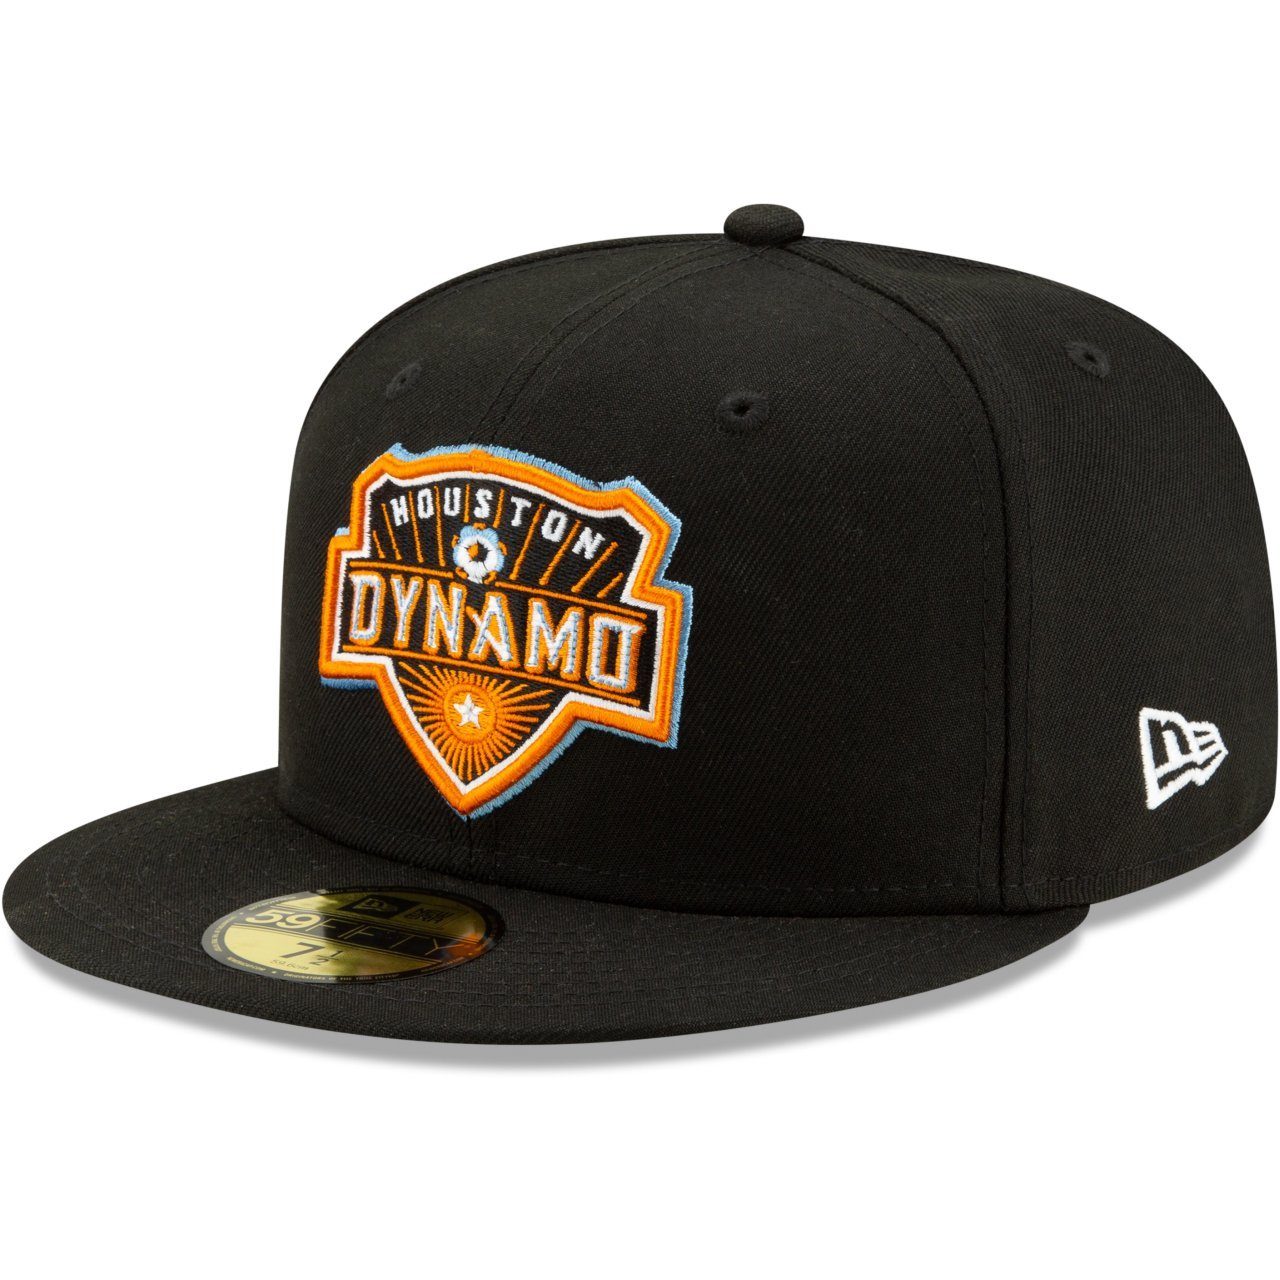 New Era Fitted Cap 59Fifty MLS Houston Dynamo